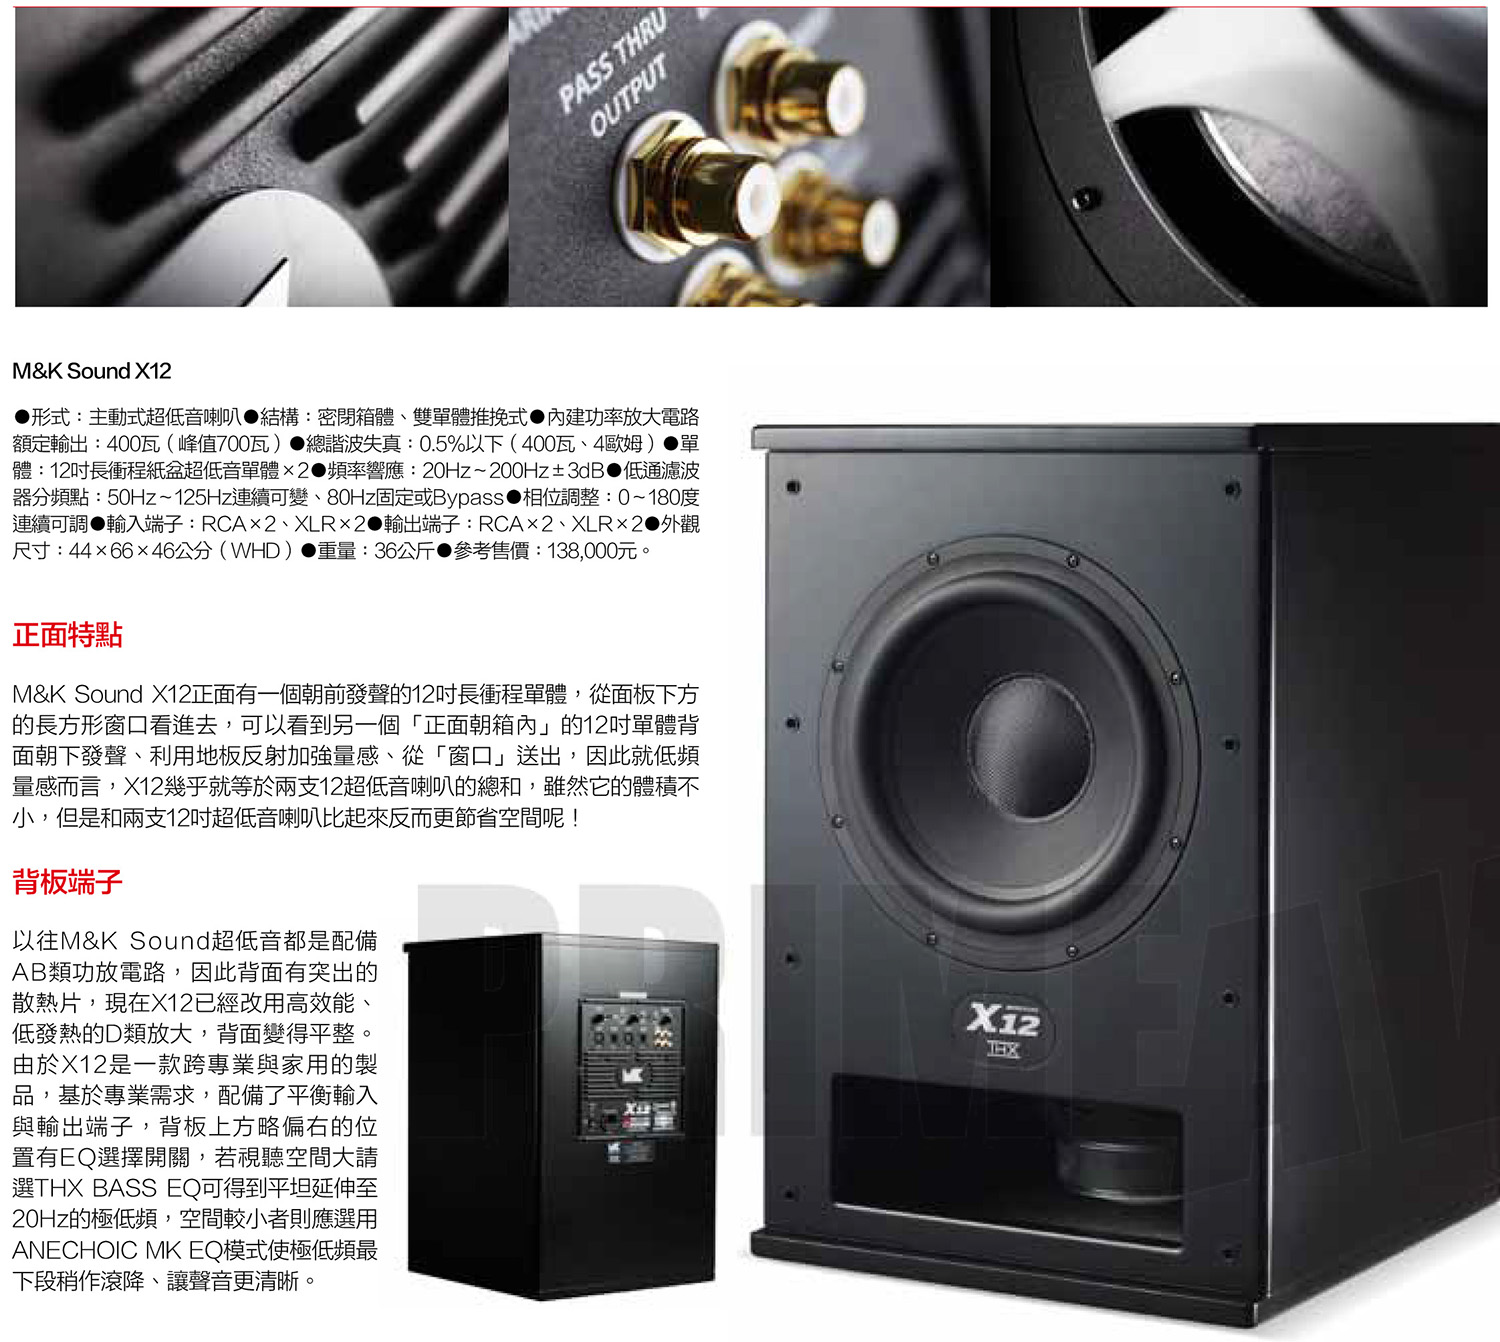 M&K SOUND超低音X12產品照與正面特點和背板端子